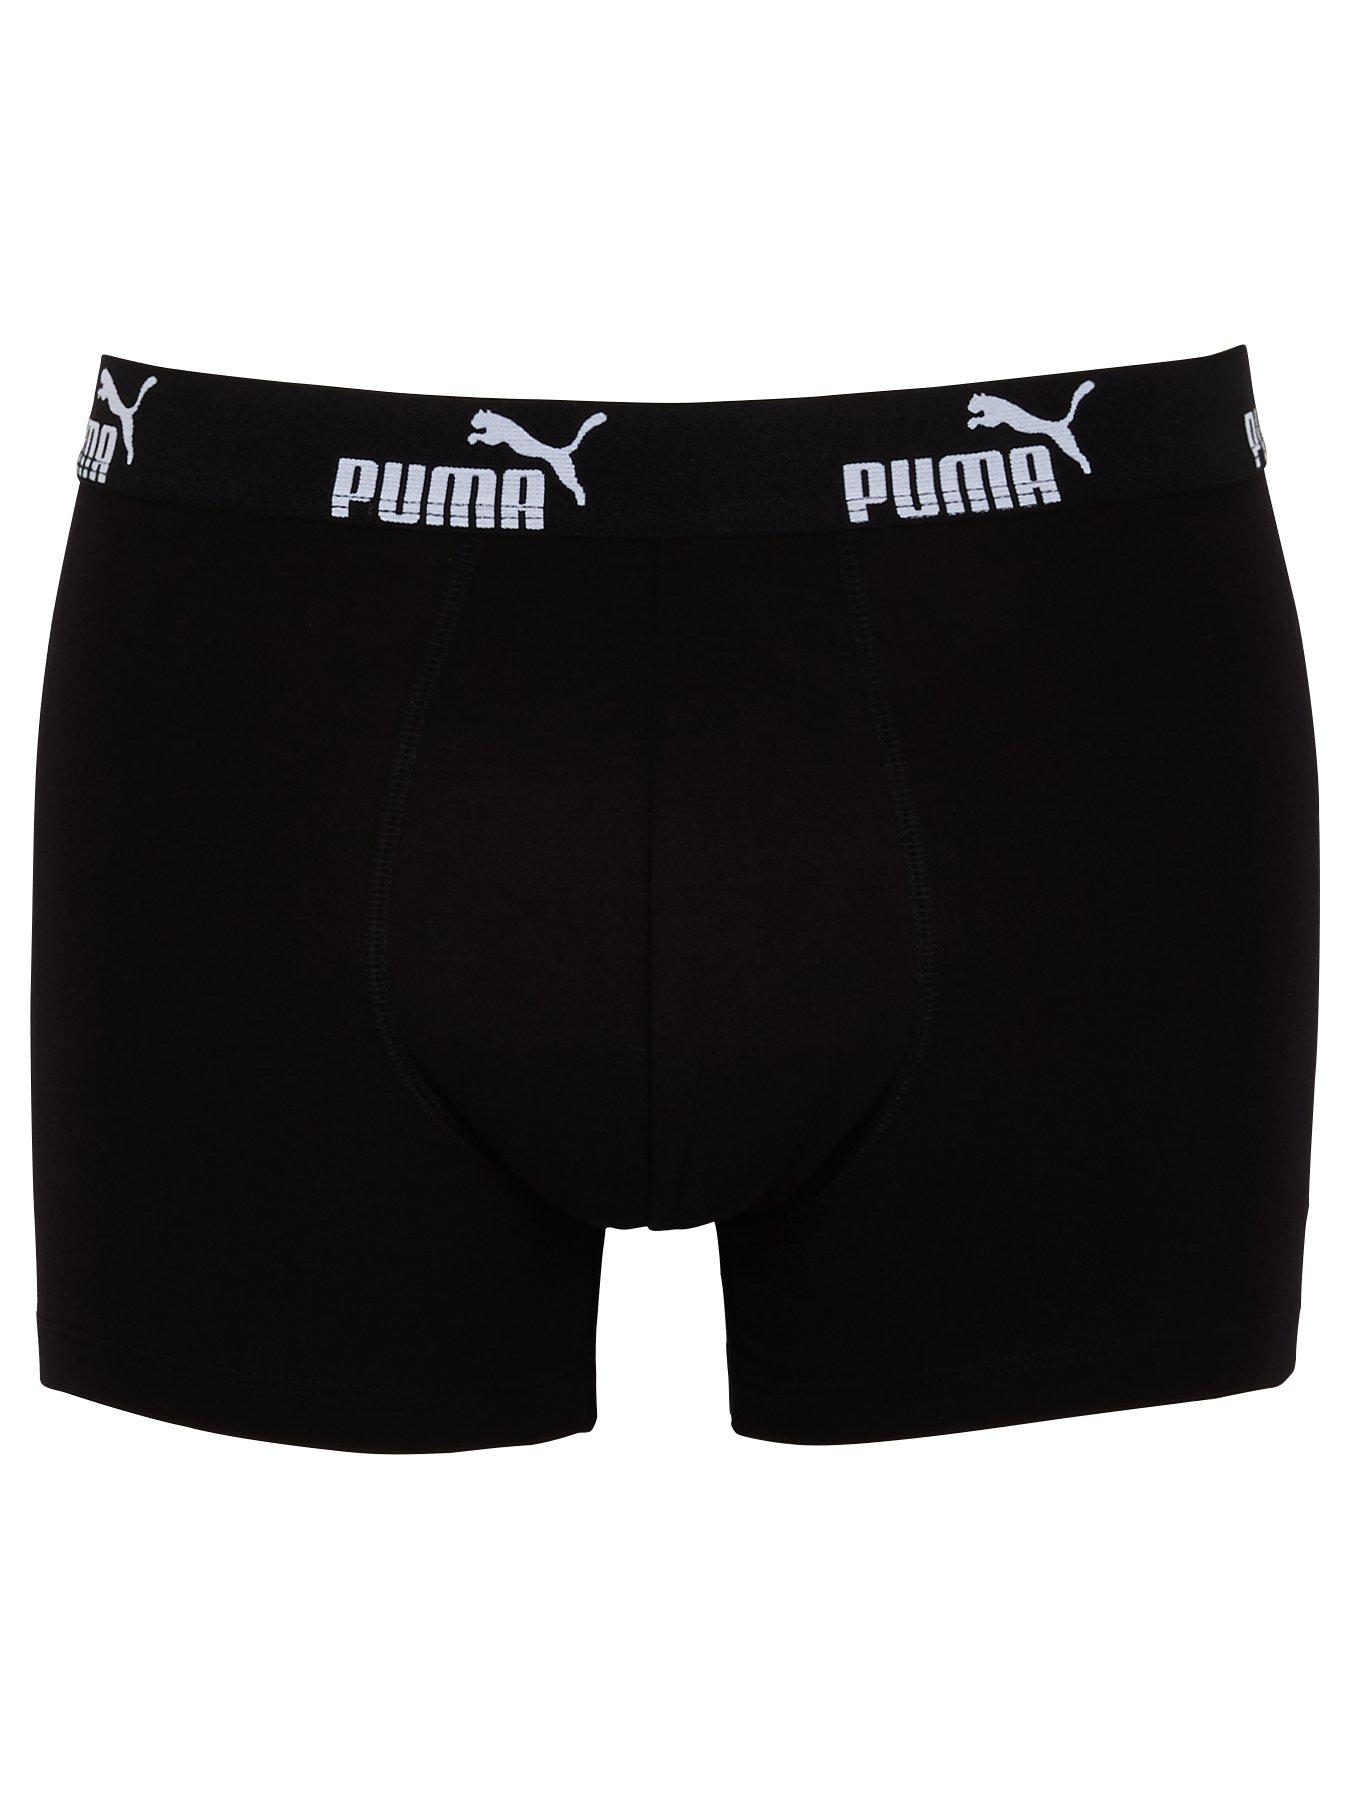 puma boxershorts 4 pack